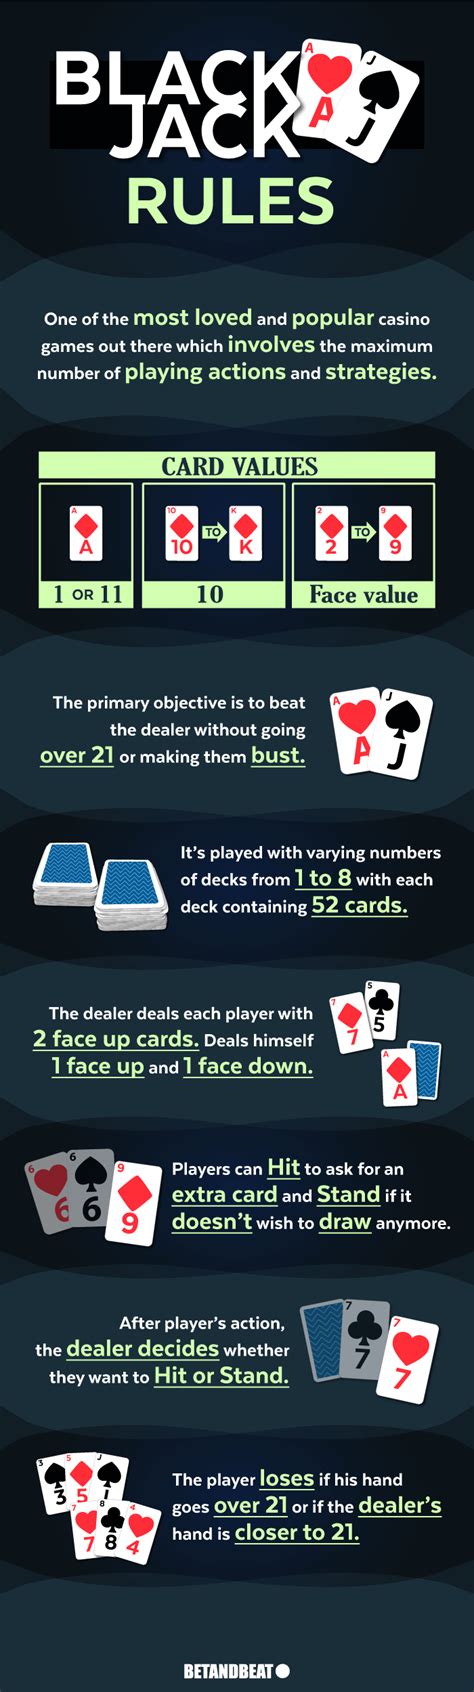 blackjack at casino rules